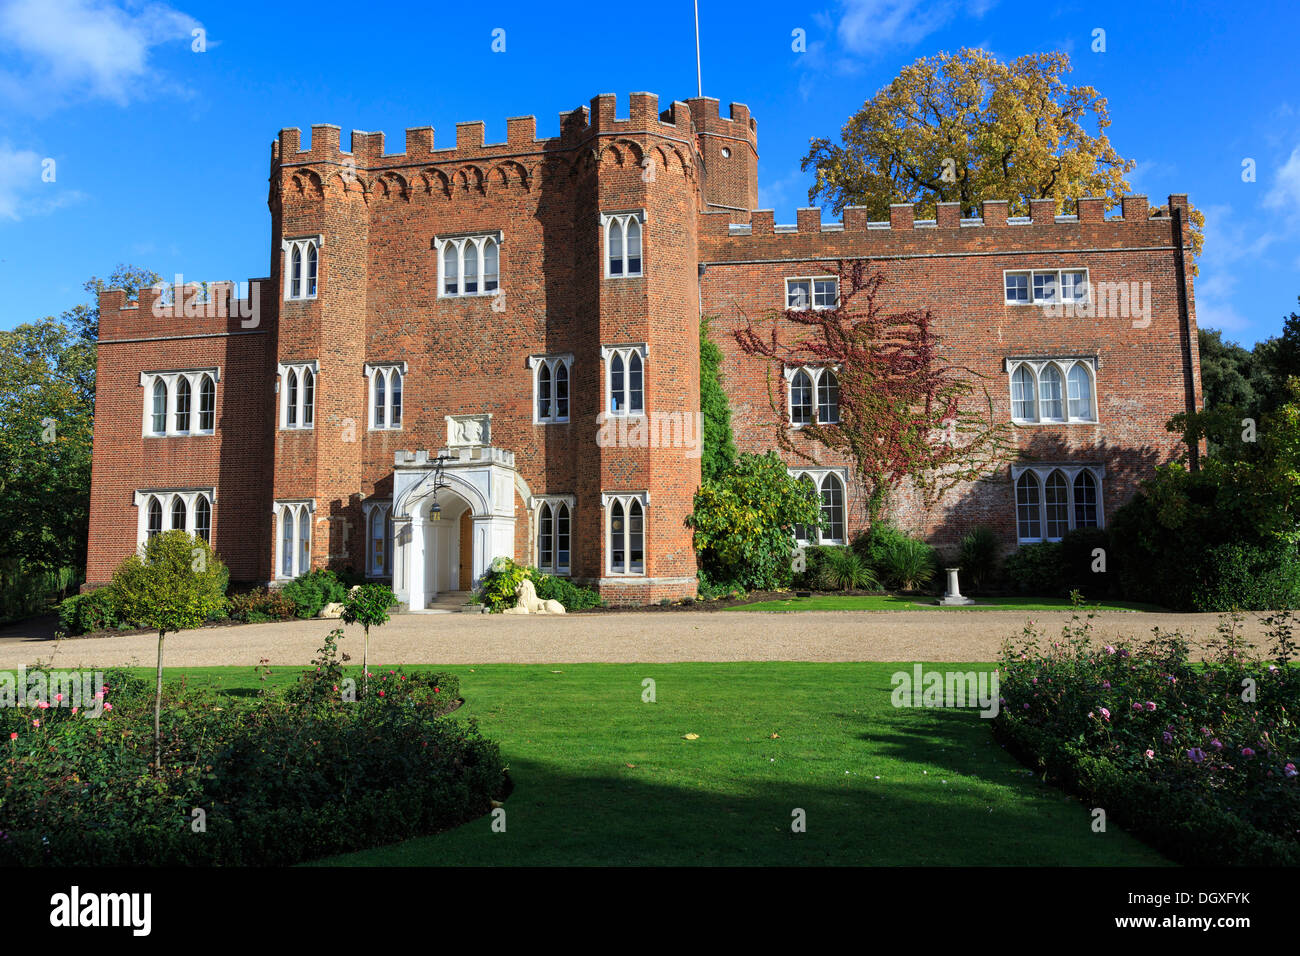 Parc du château de hertford Hertfordshire England uk go Banque D'Images